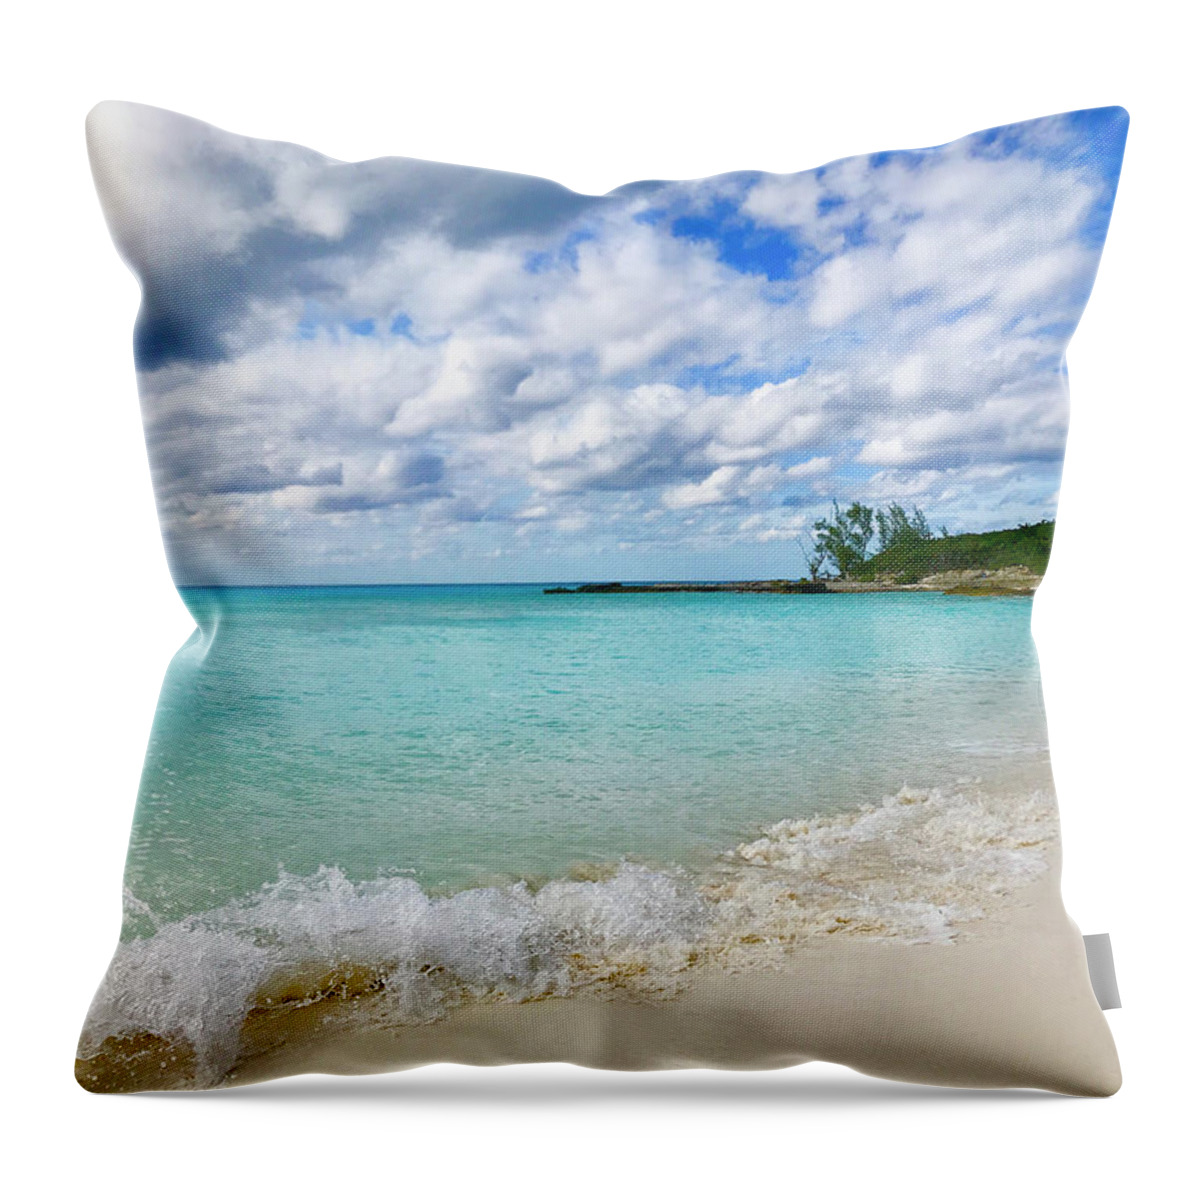 Tropics Throw Pillow featuring the photograph Tropical Beach by Sarah Lilja